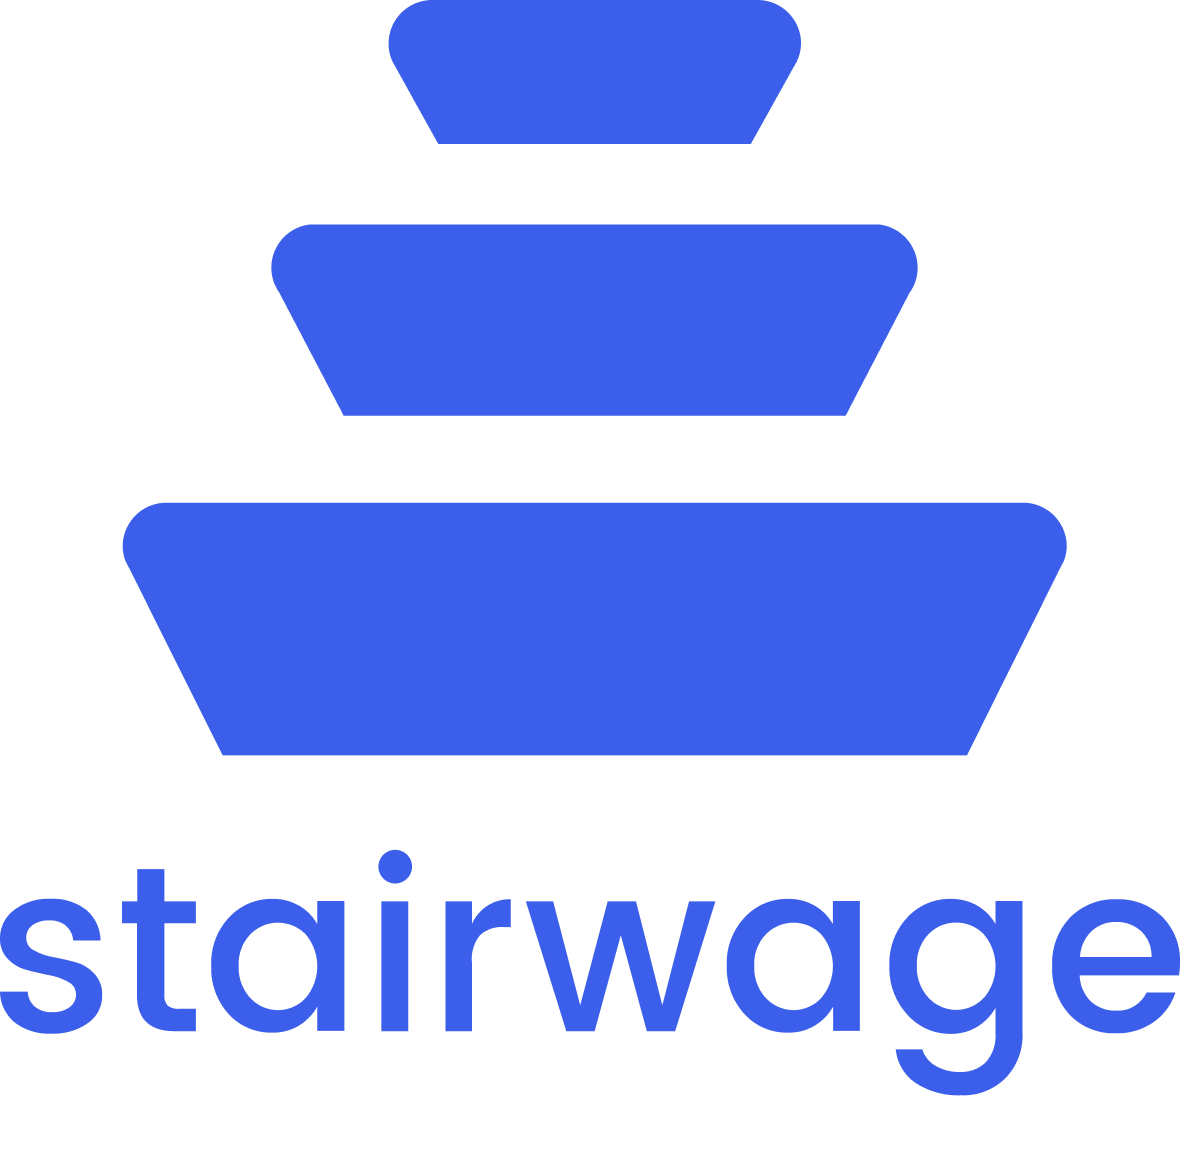 Stairwage